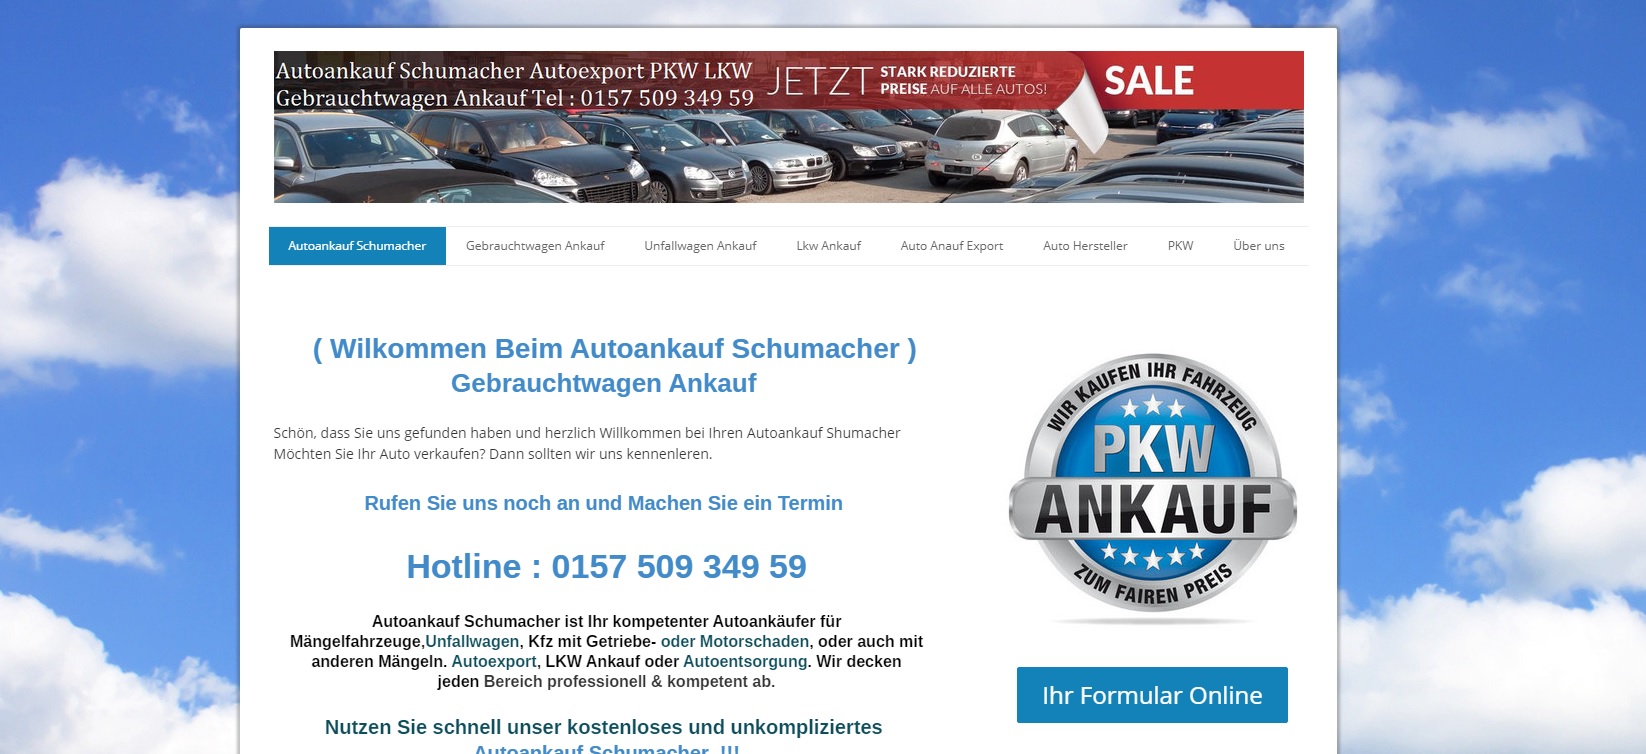 Autoankauf-Schumacher.de kauft jedes Fahrzeug bundesweit